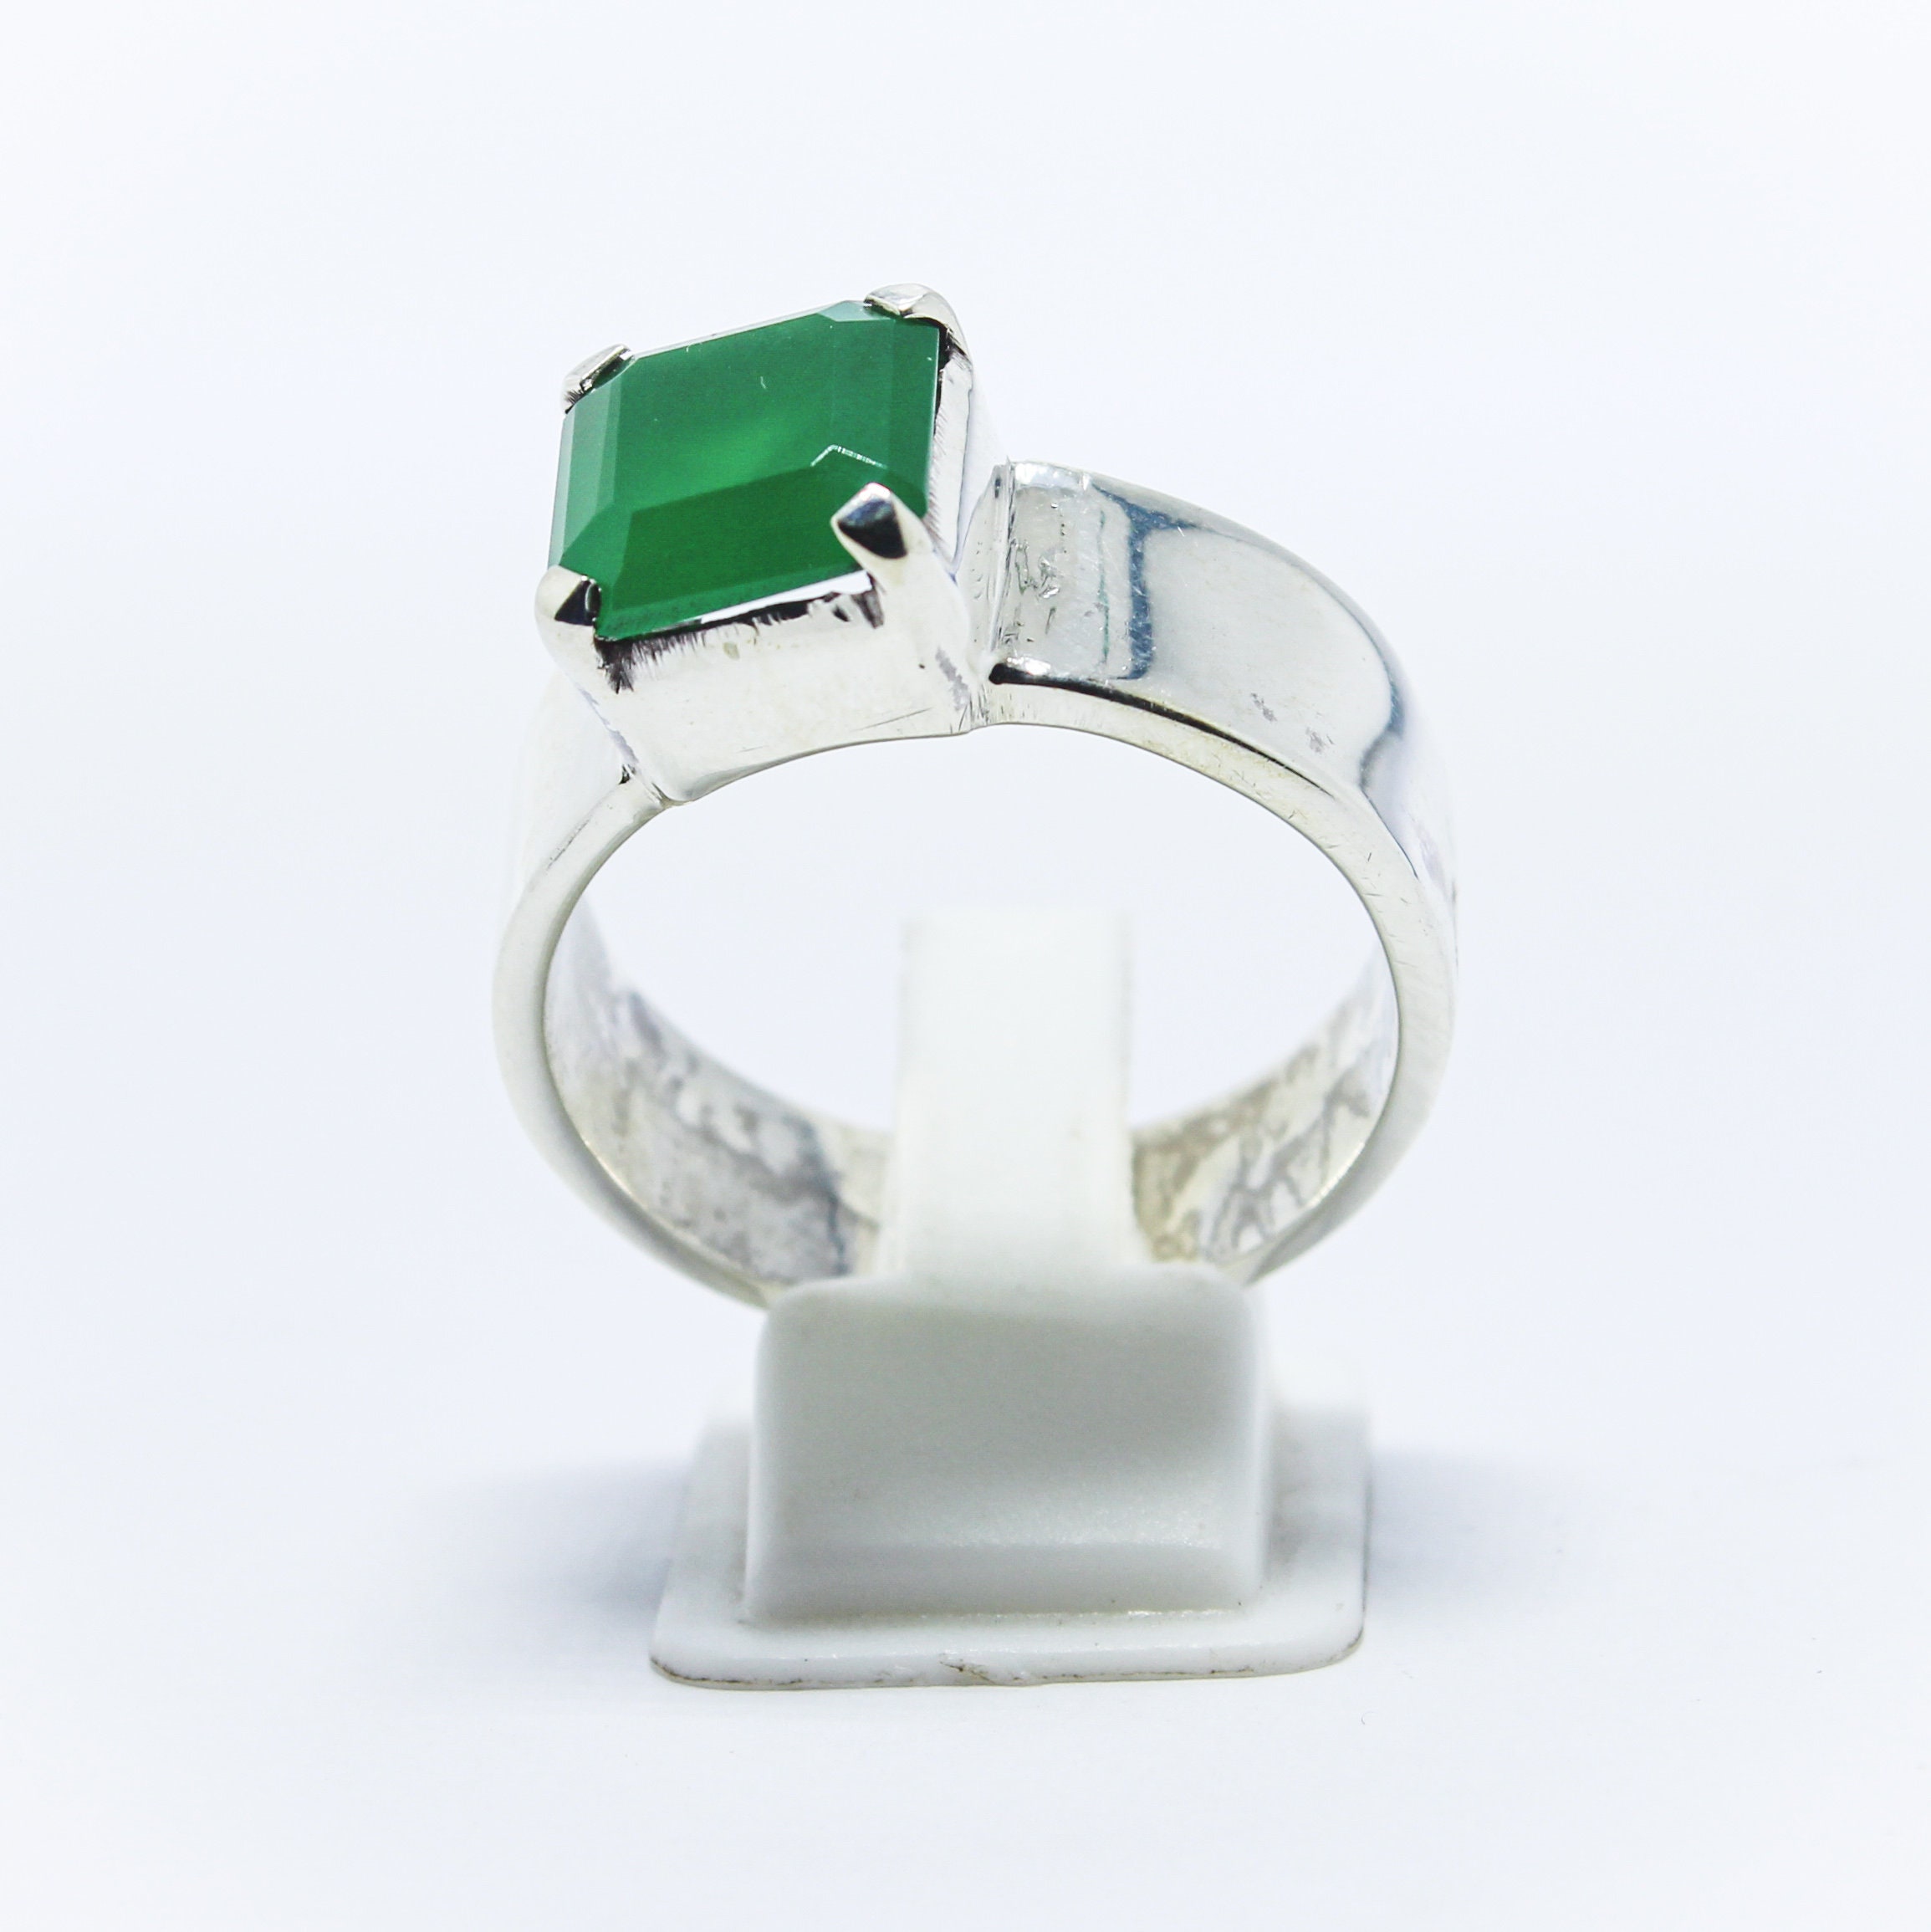 9.25 Ratti Panna Stone Original Certified Panna Stone Emerald Ring  Adjustable Woman Man Ring With Lab Certificate